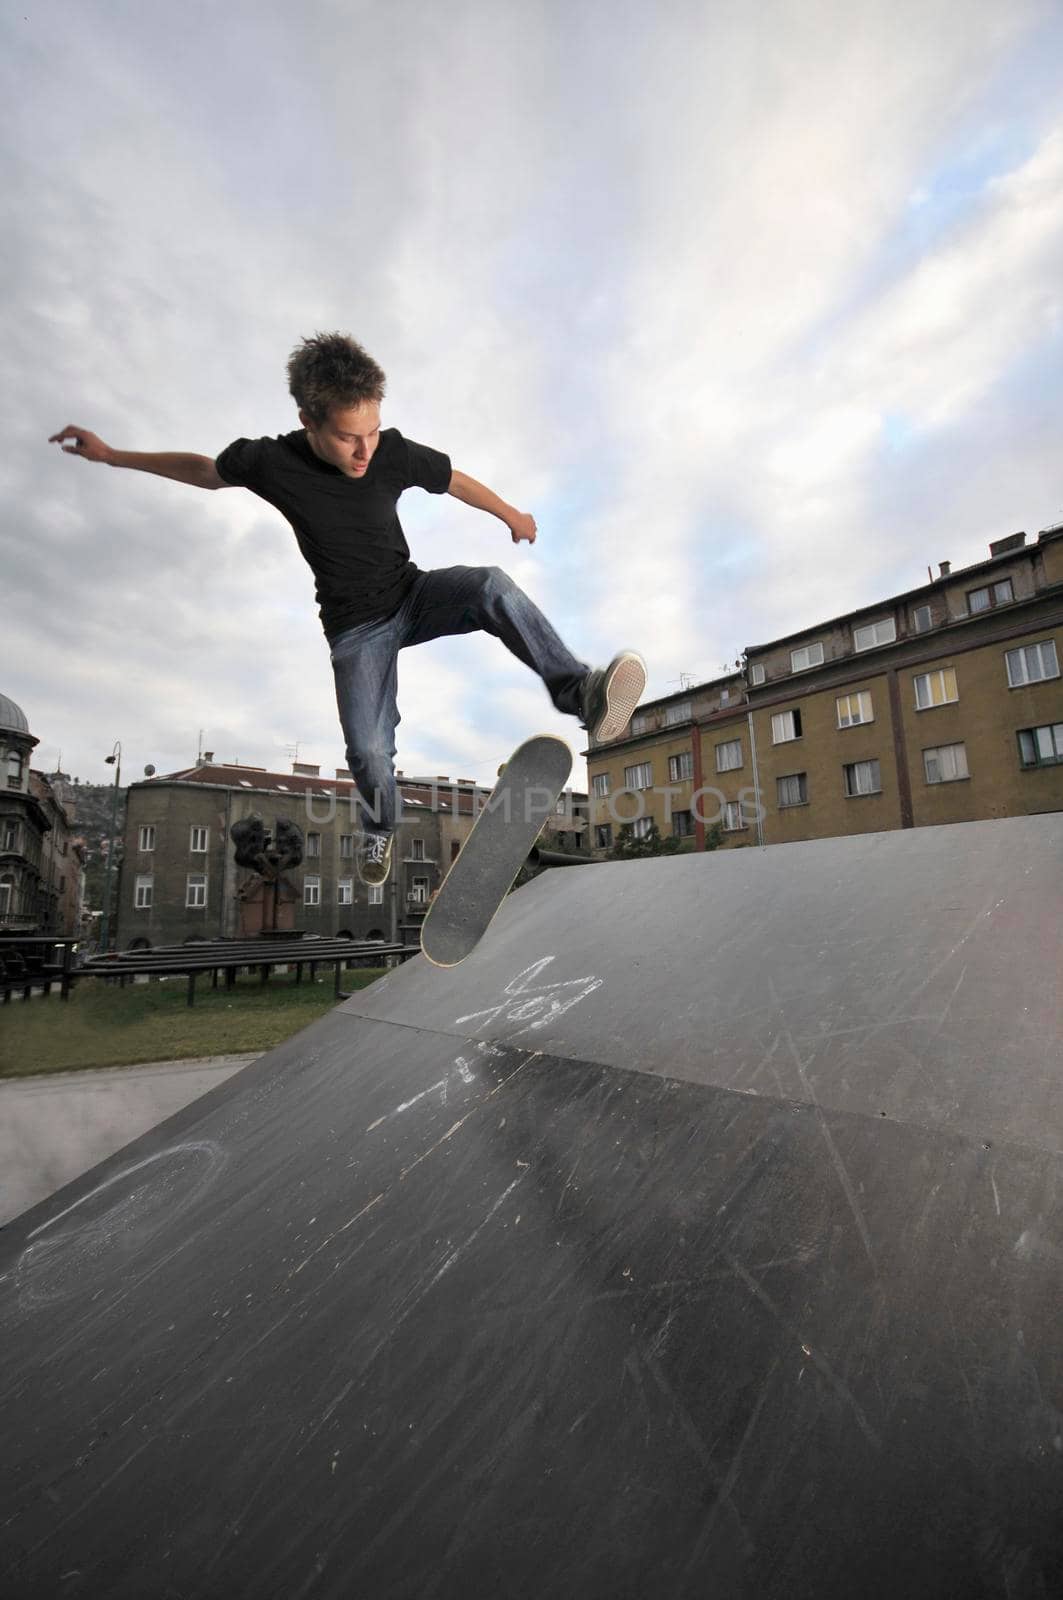 Boy practicing skate in a skate park by dotshock